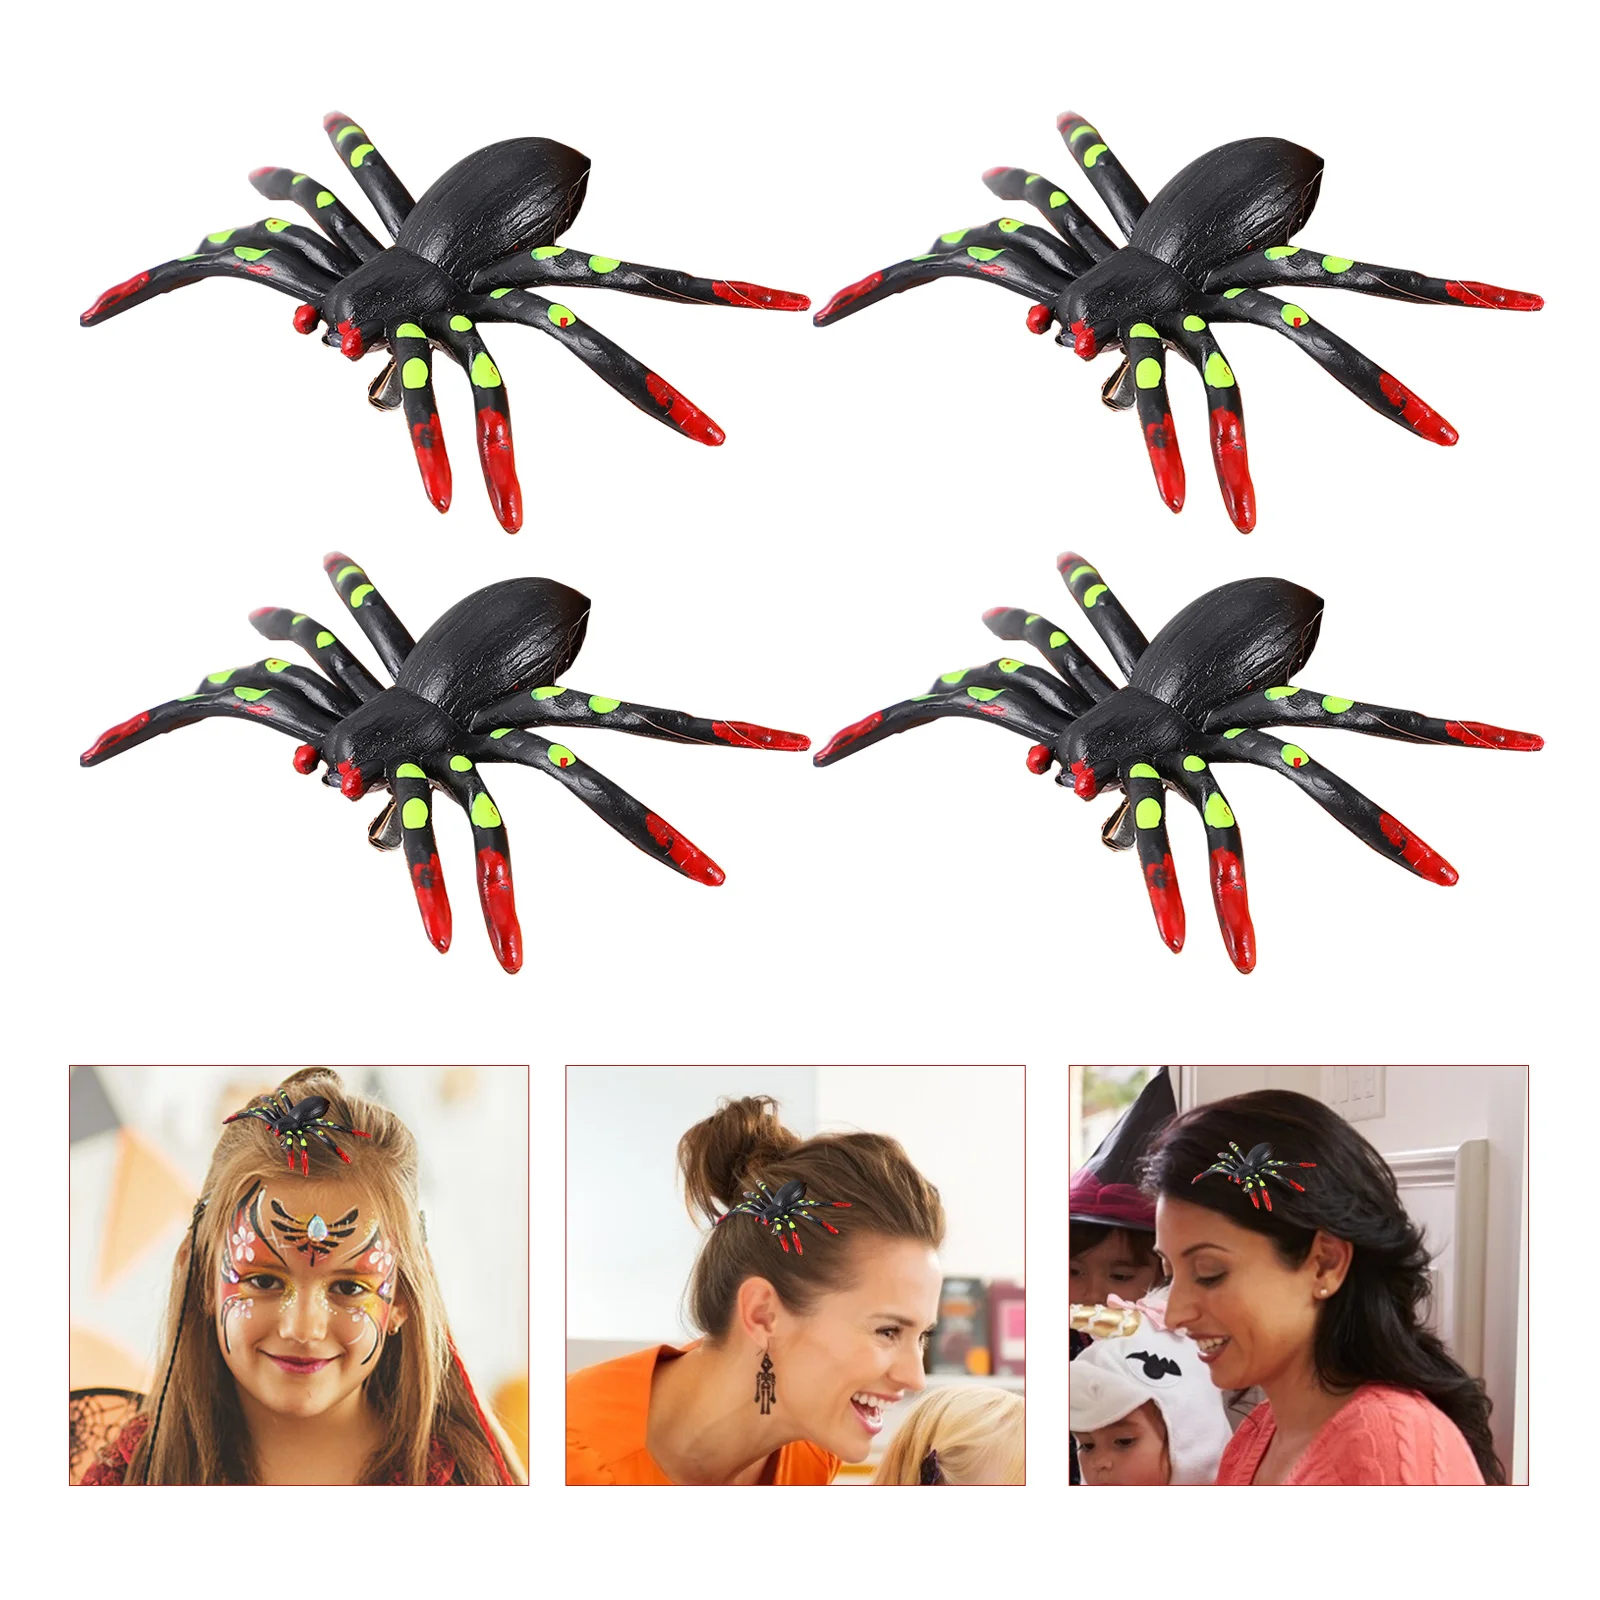 

Hair Spidergothic Clips Web Hairpins Barrettes Accessories Clipduckbill Barrette Horror Headpiece Hairpin Headdress Spooky